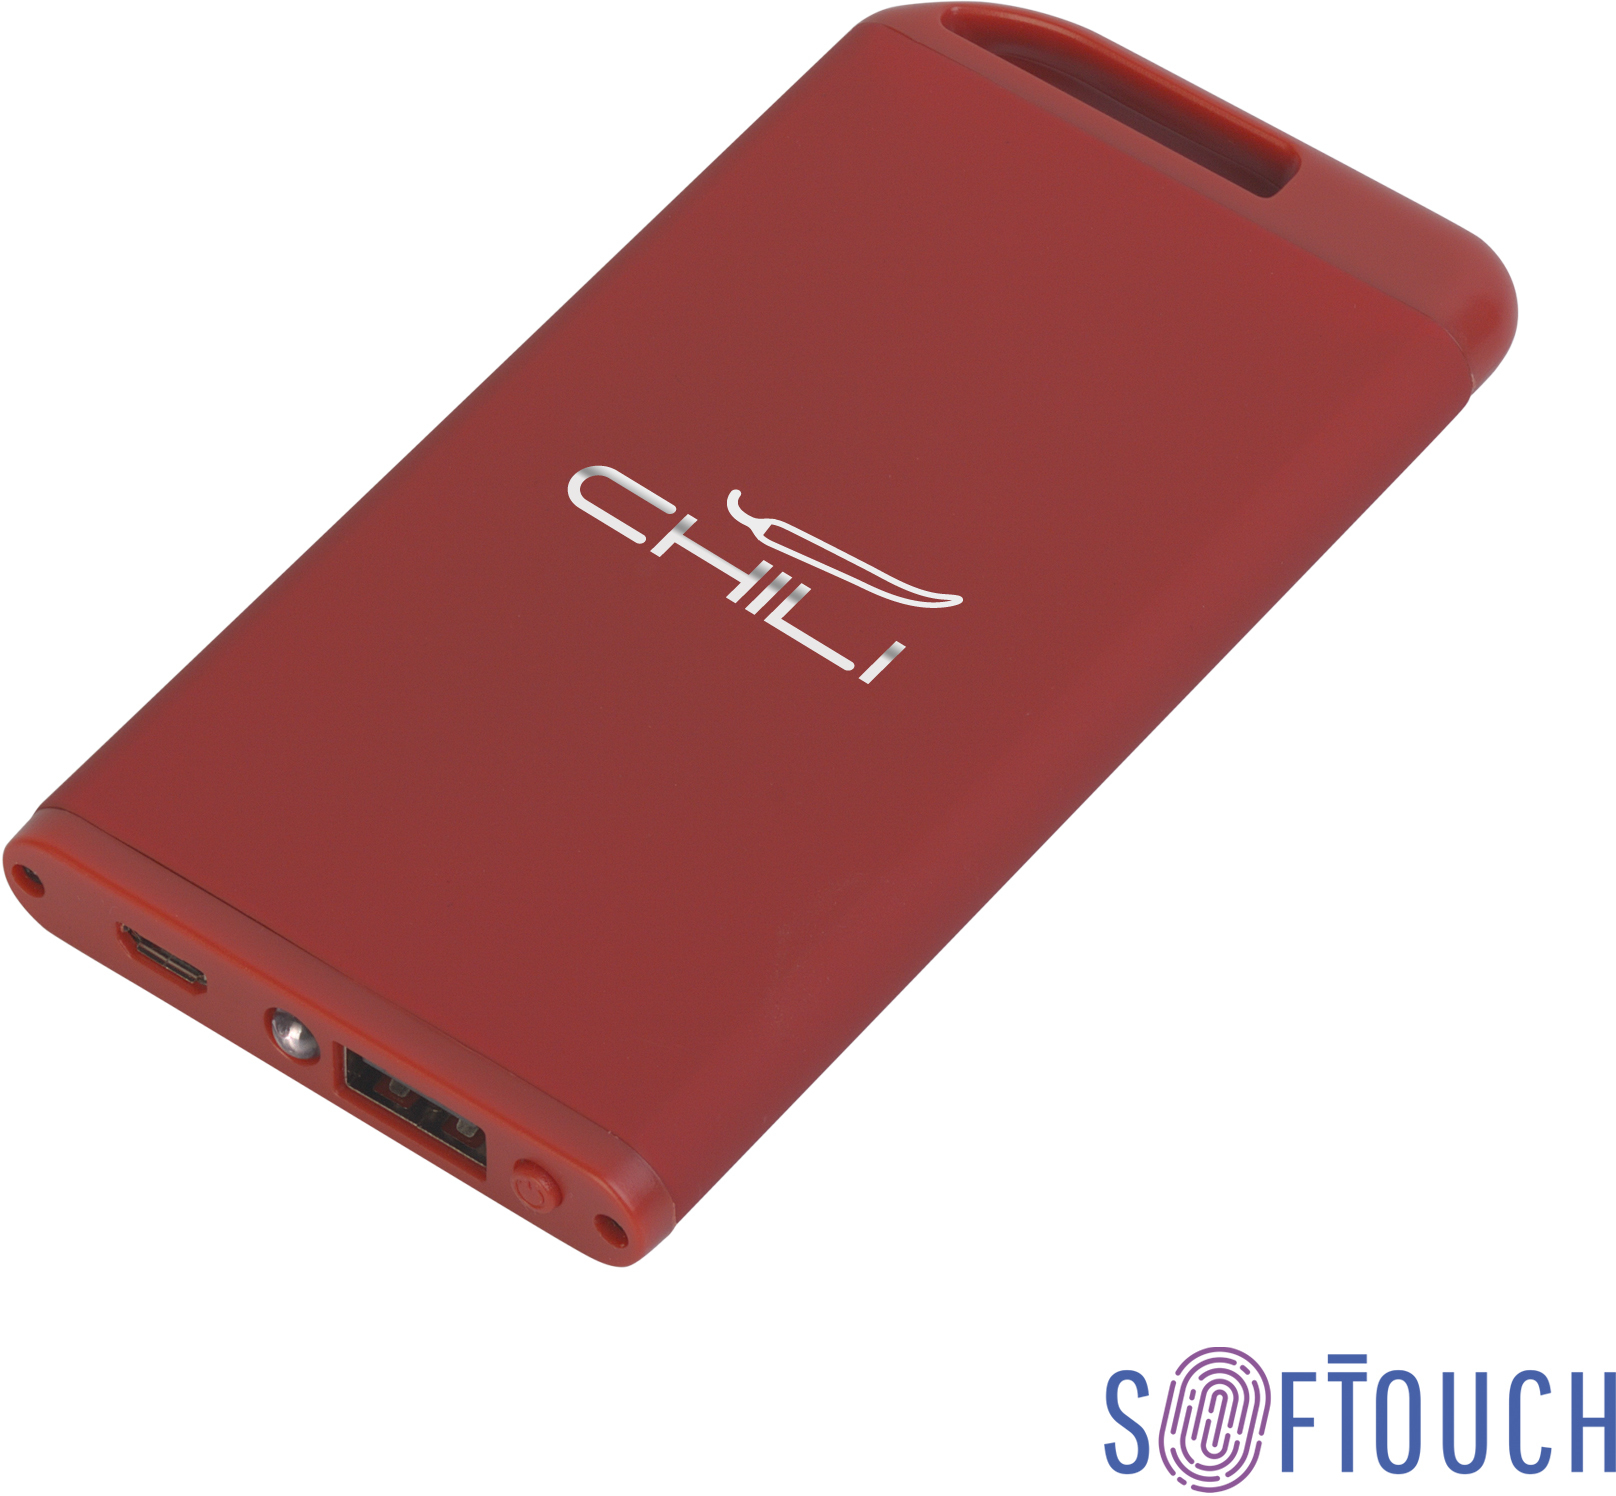 Артикул: E6871-4 — Зарядное устройство "Theta" с фонариком, 4000 mAh, покрытие soft touch